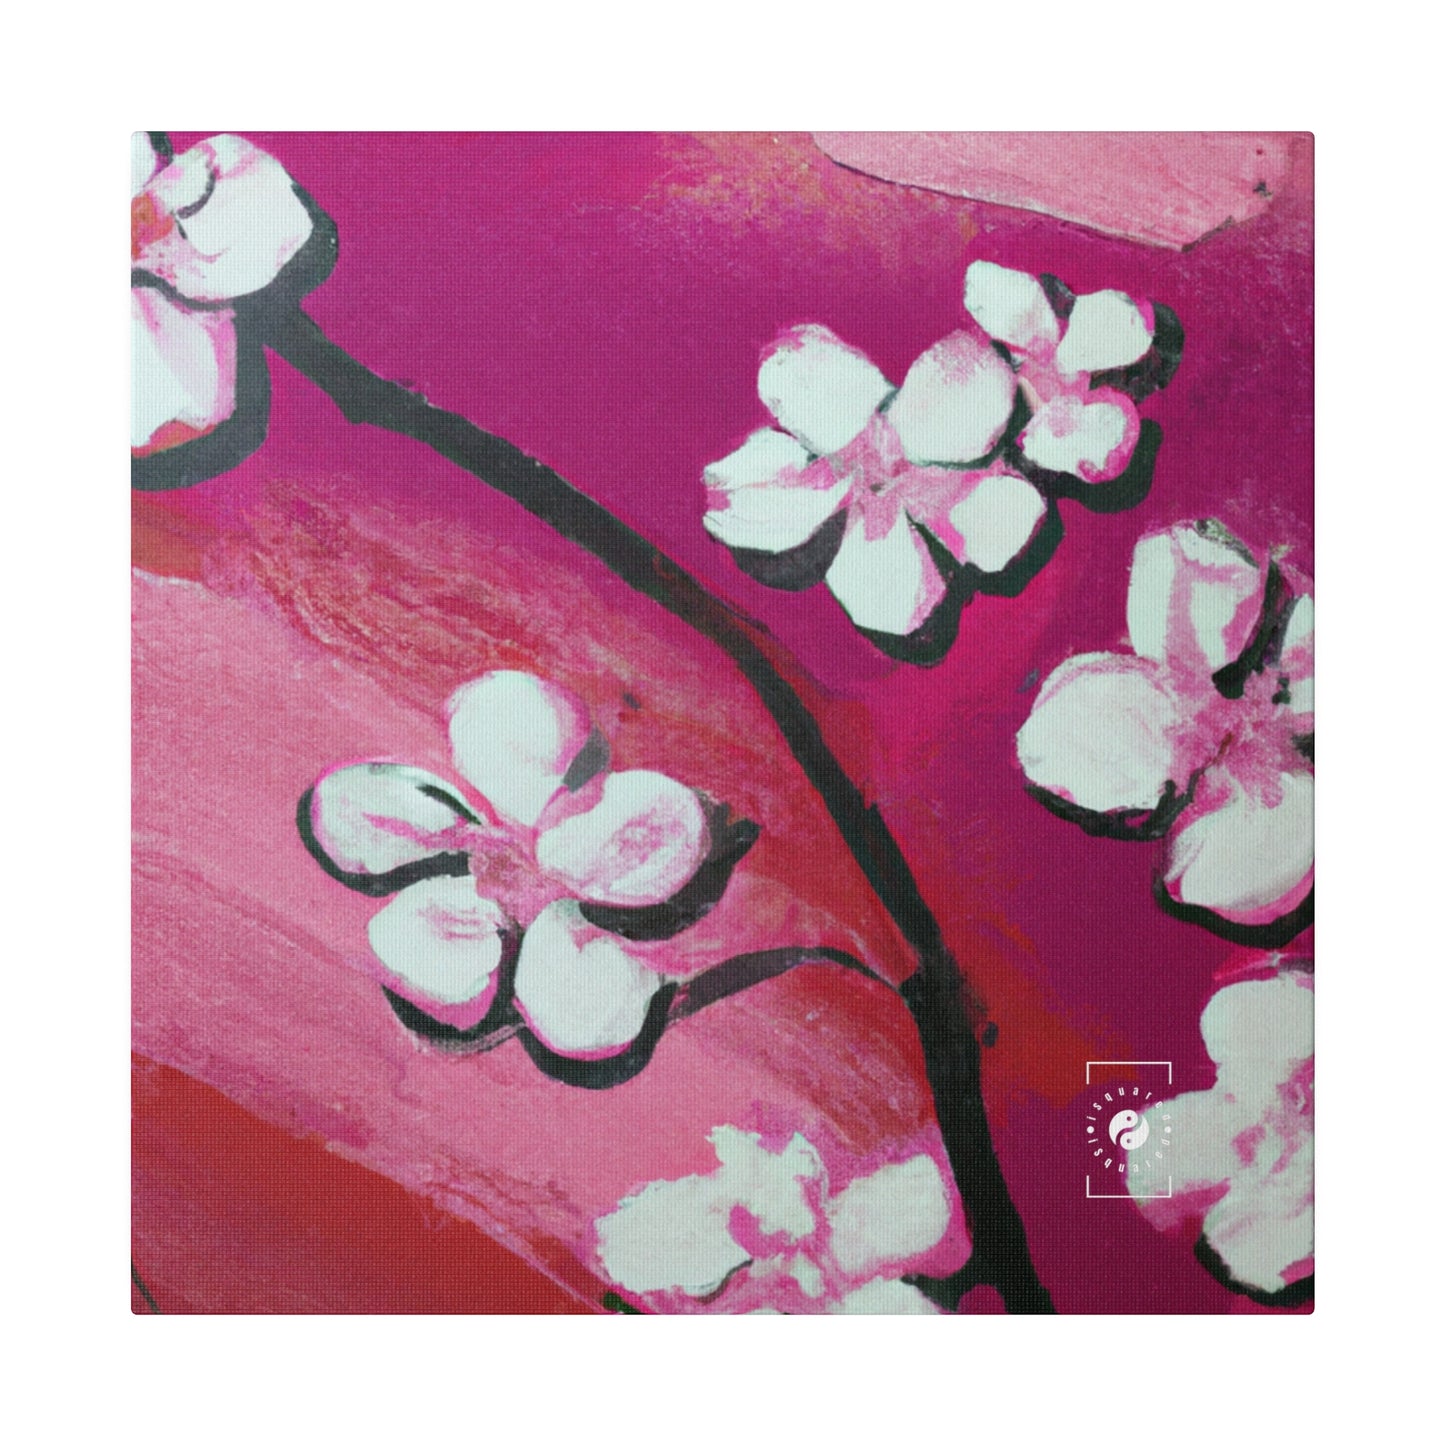 Ephemeral Blossom - Art Print Canvas